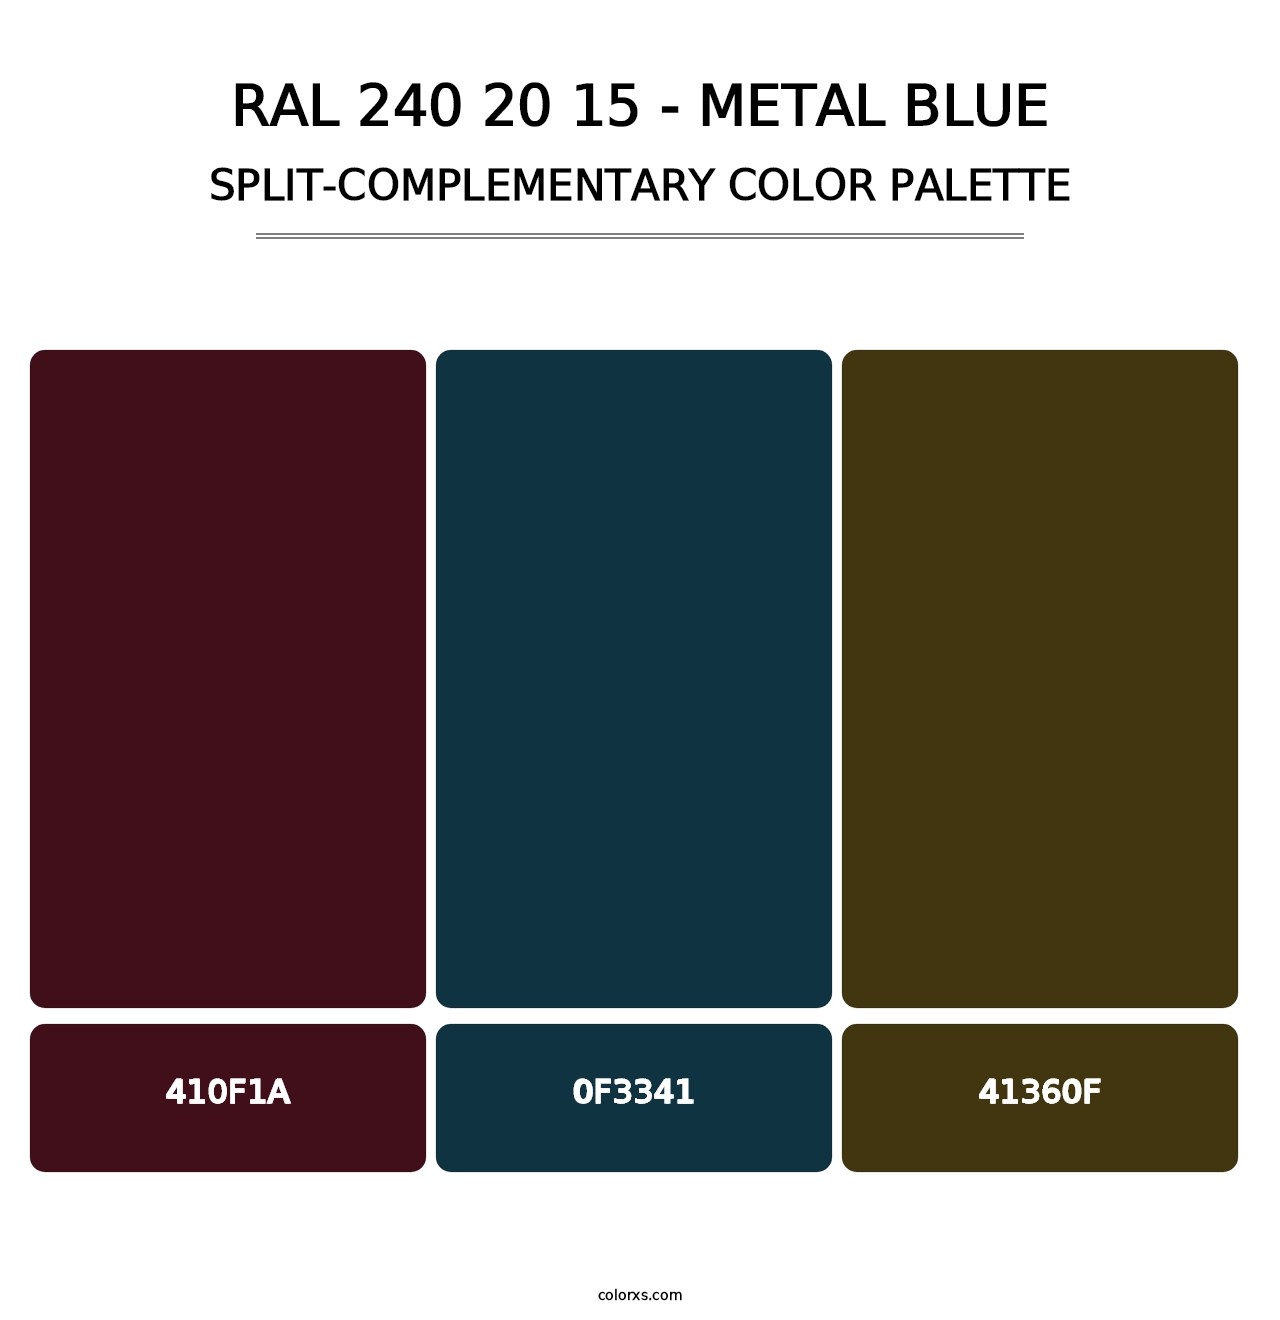 RAL 240 20 15 - Metal Blue - Split-Complementary Color Palette